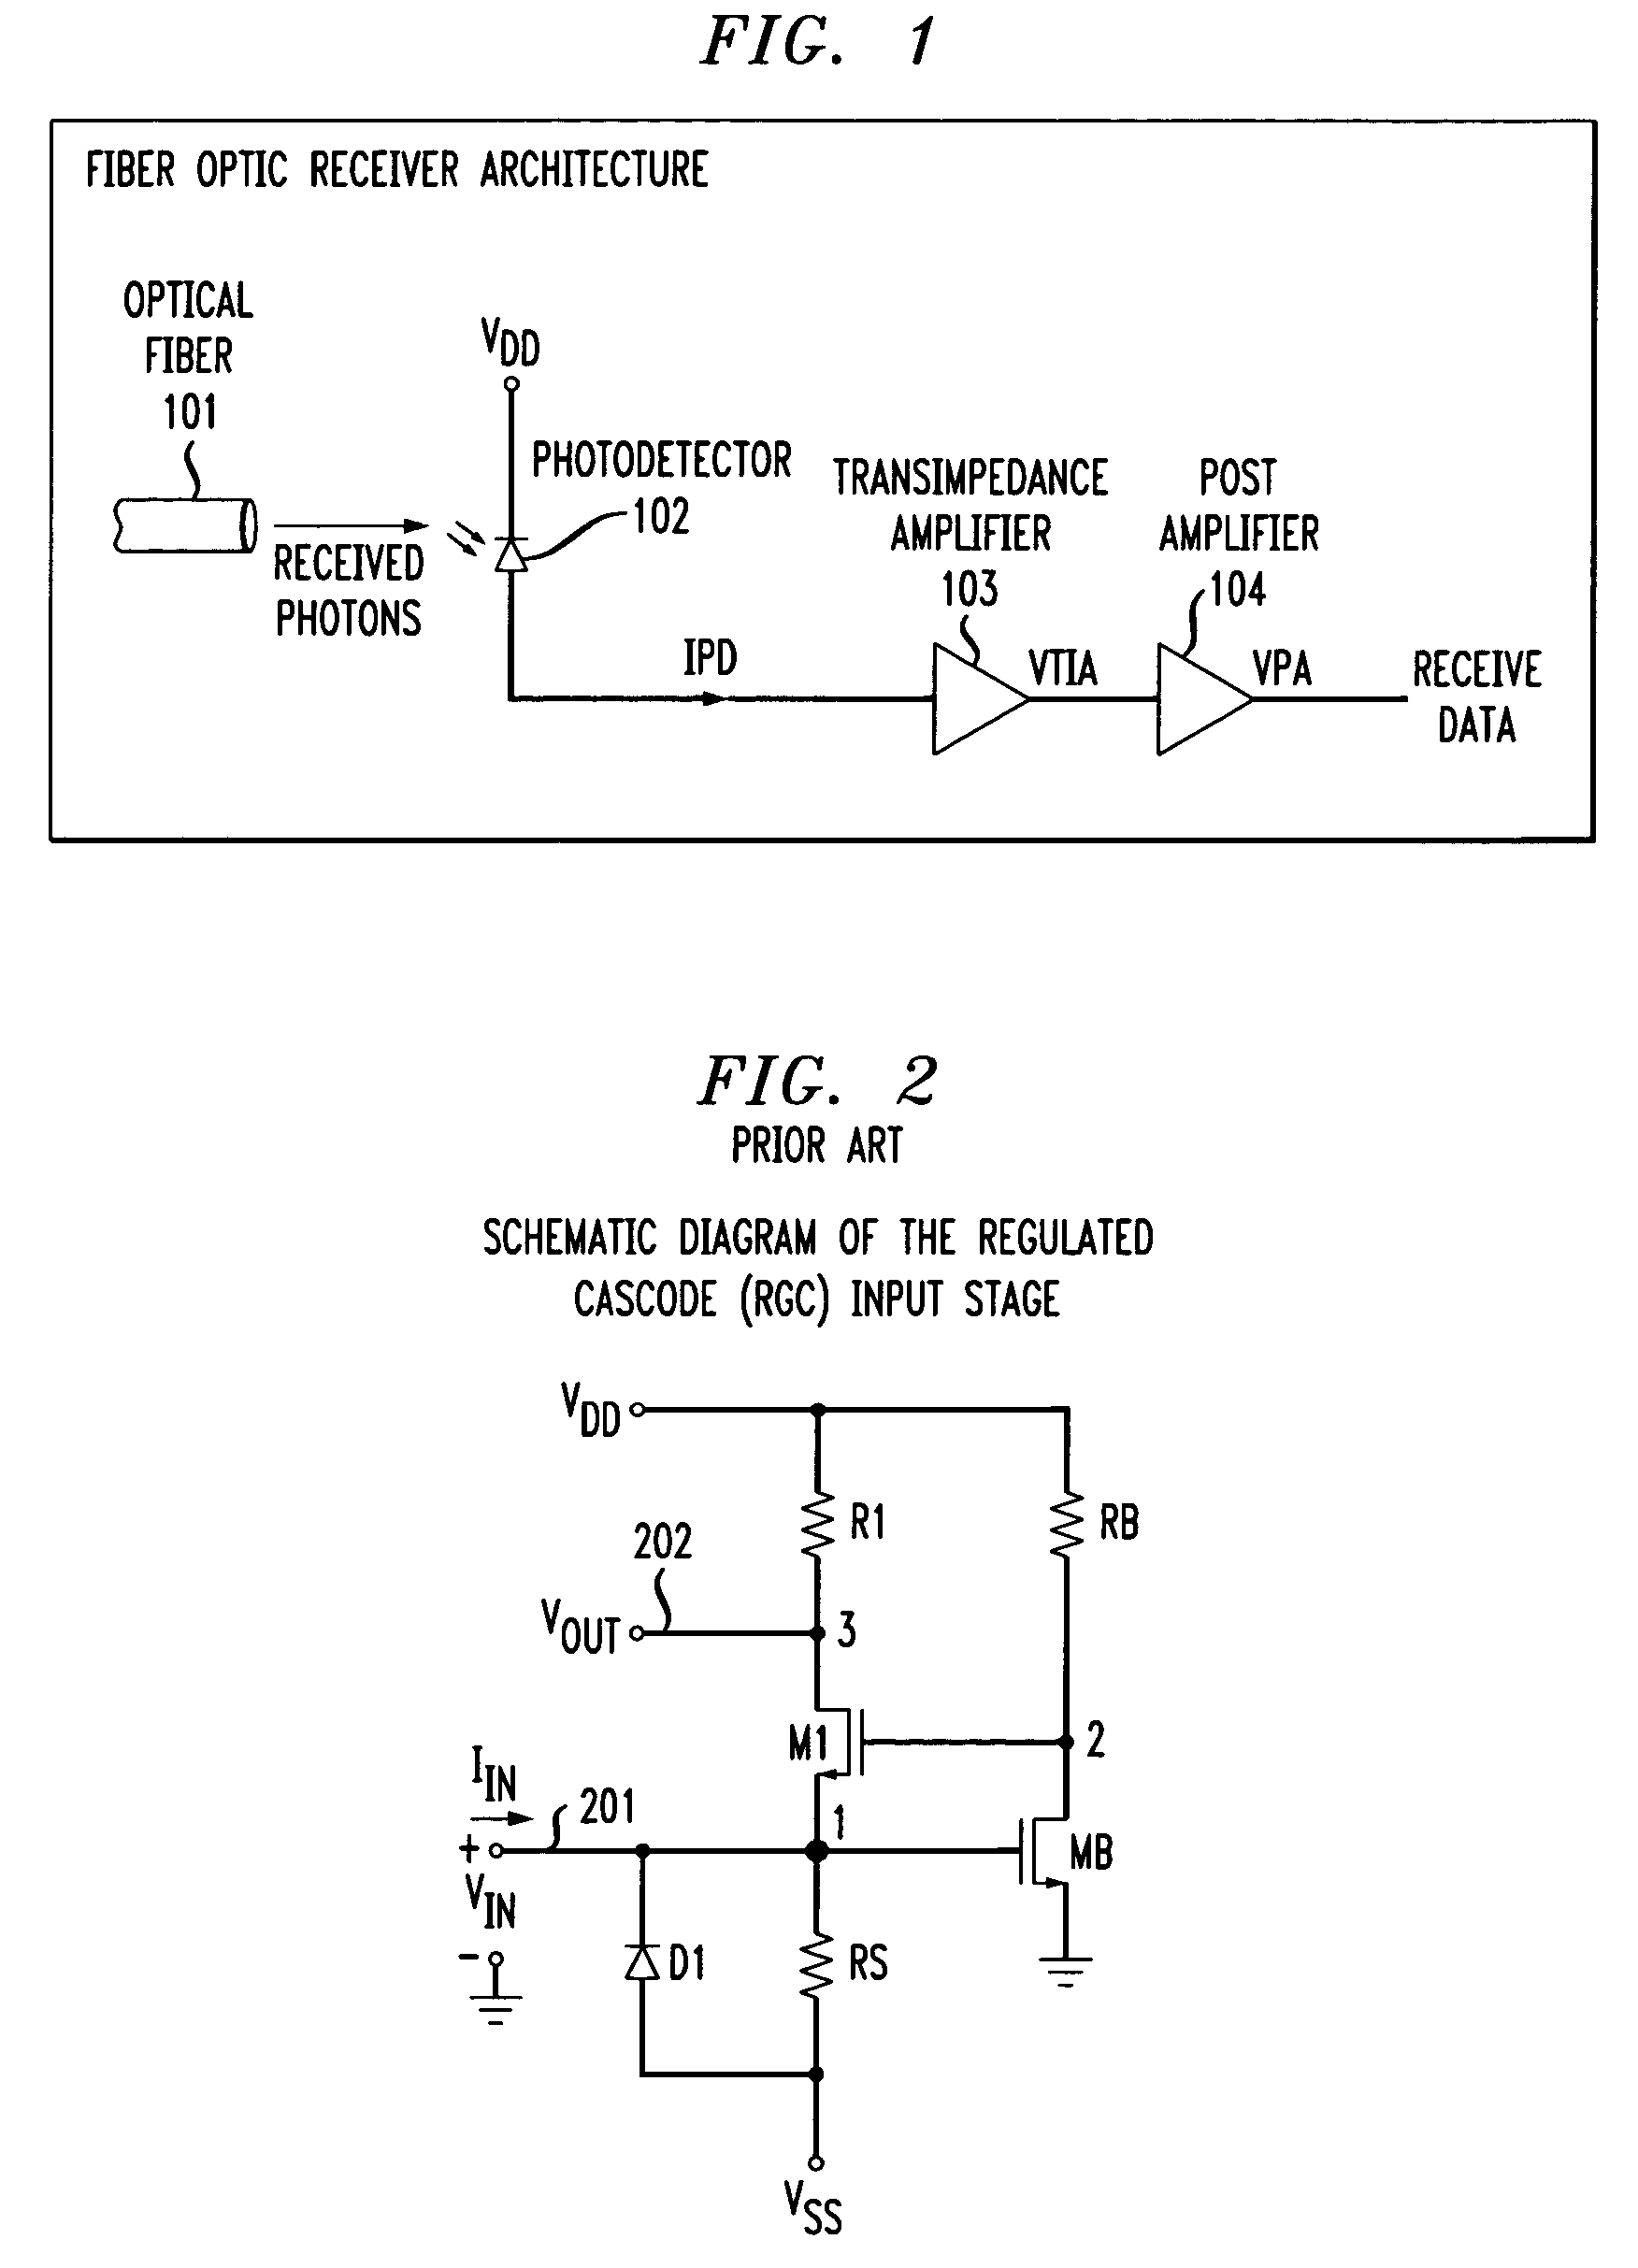 Transimpedance amplifier